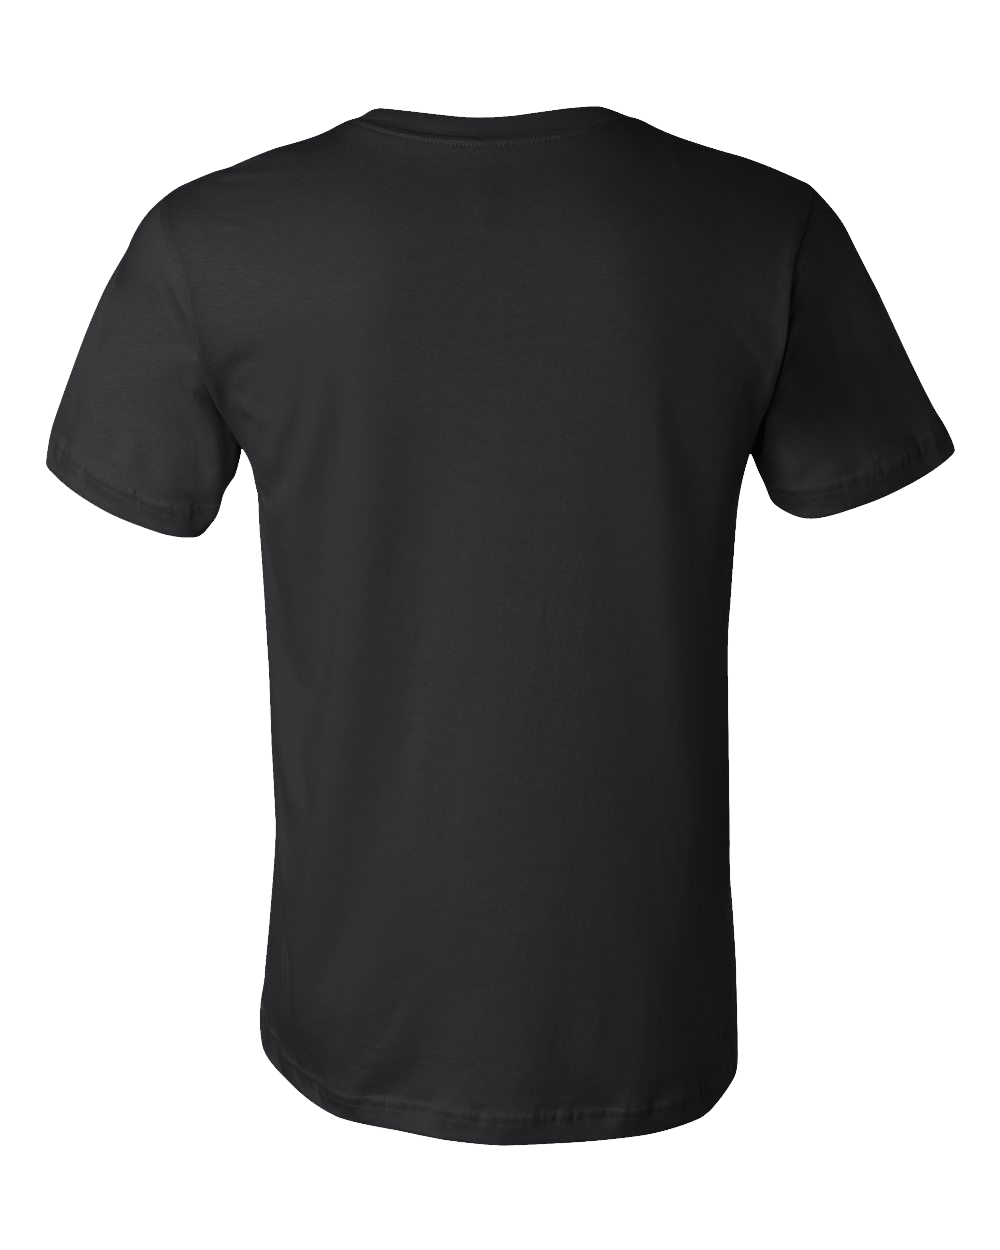 Standard Black Afton, OK | Retro, Vintage Style Oklahoma Pride  T-shirt